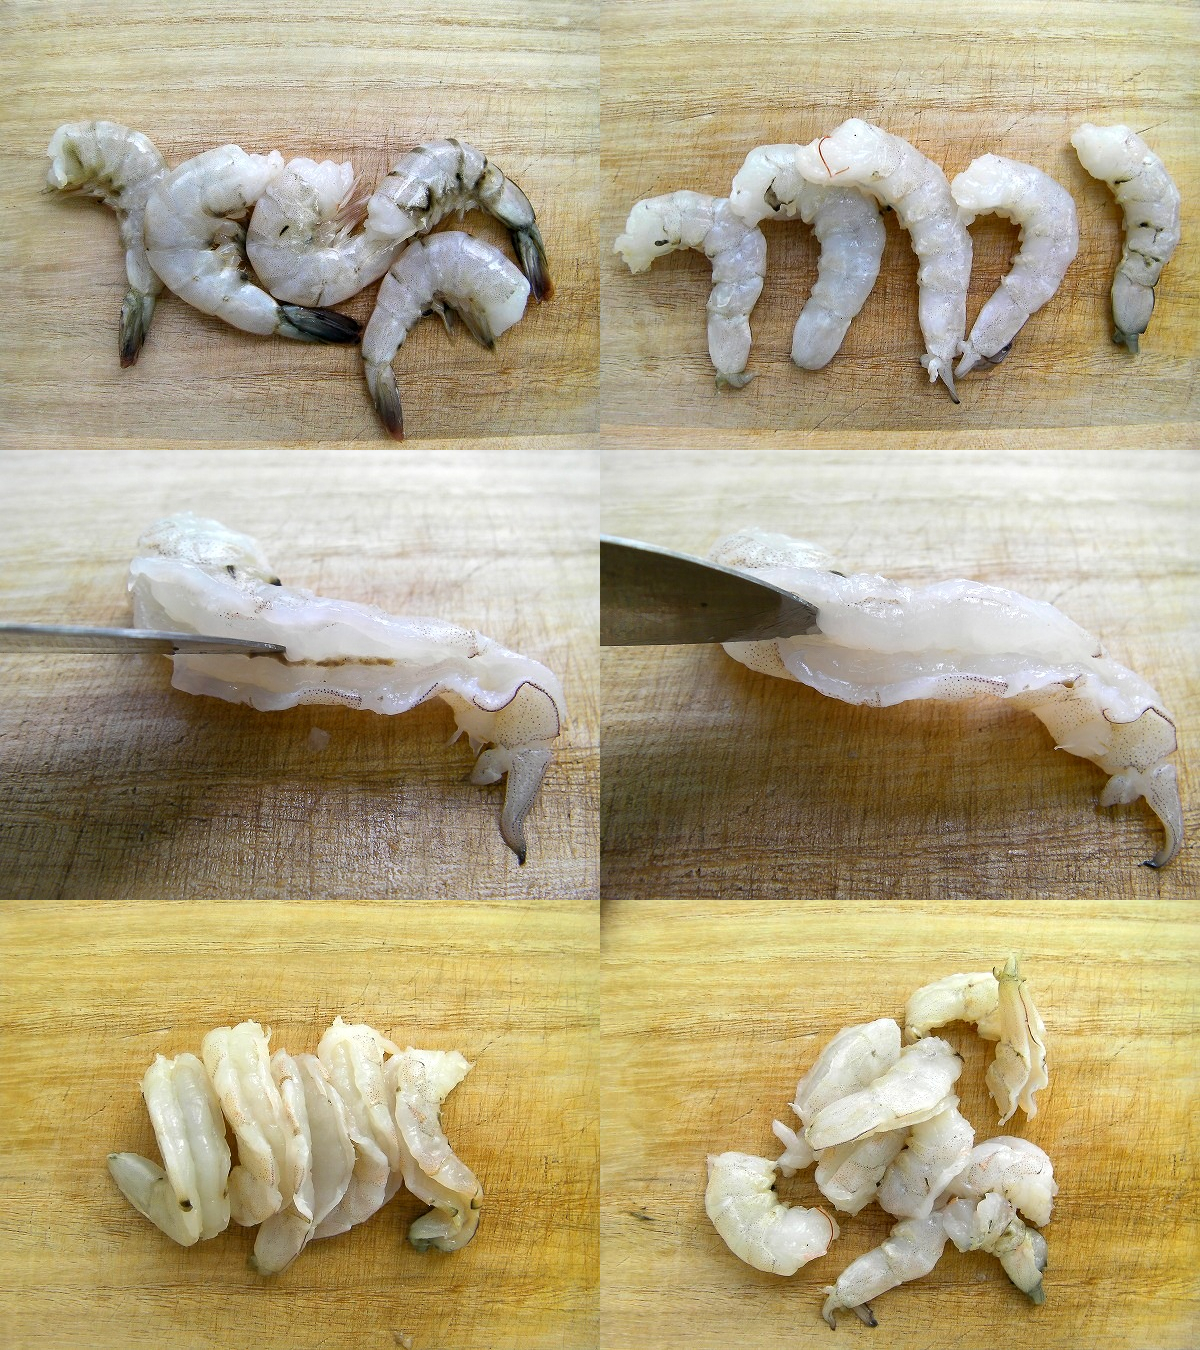 Shrimp and vegetable tempura (23)new2